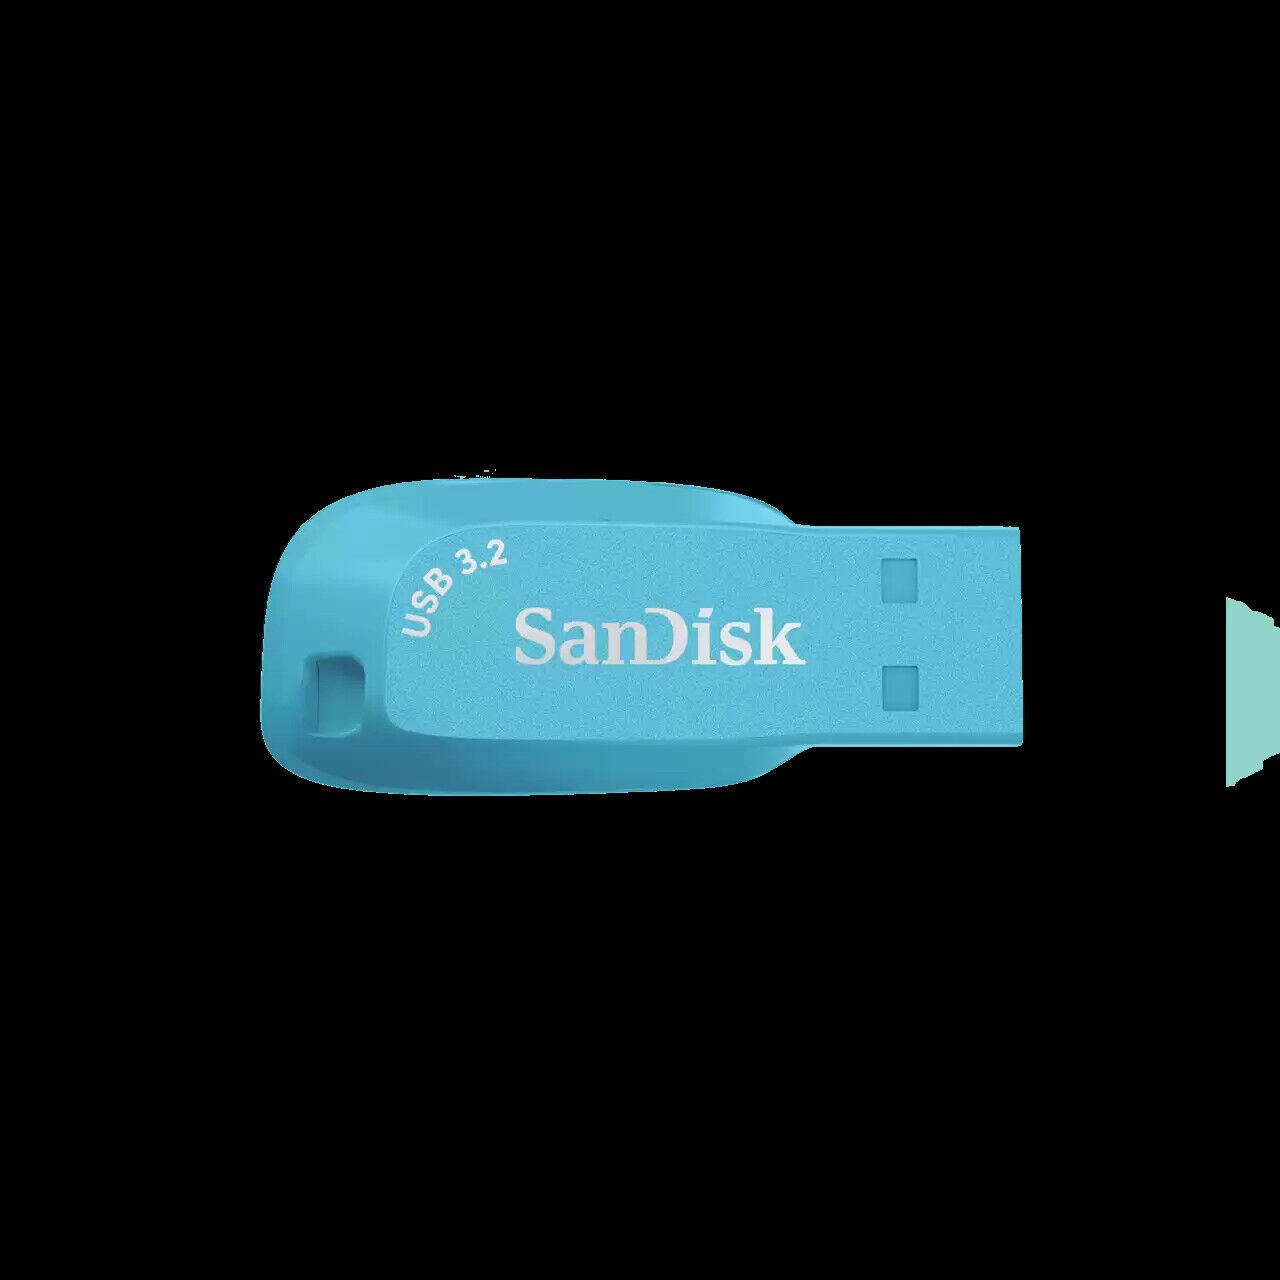 SanDisk 512GB Ultra Shift USB 3.2 Gen 1 Flash Drive, Blue - SDCZ410-512G-G46BB